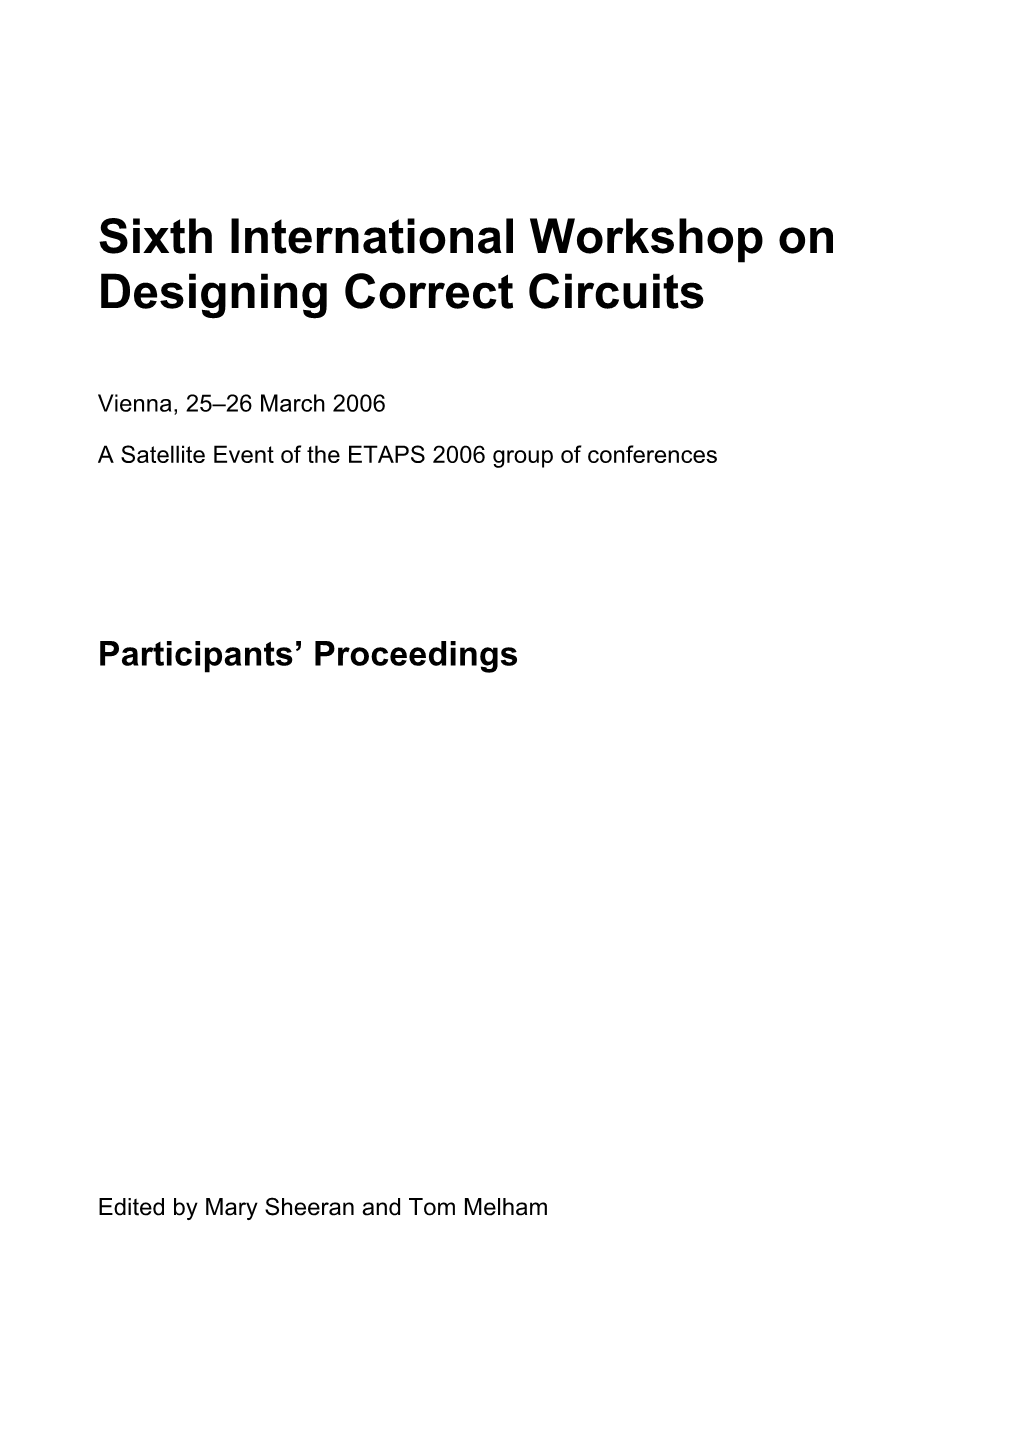 Sixth International Workshop on Designing Correct Circuits